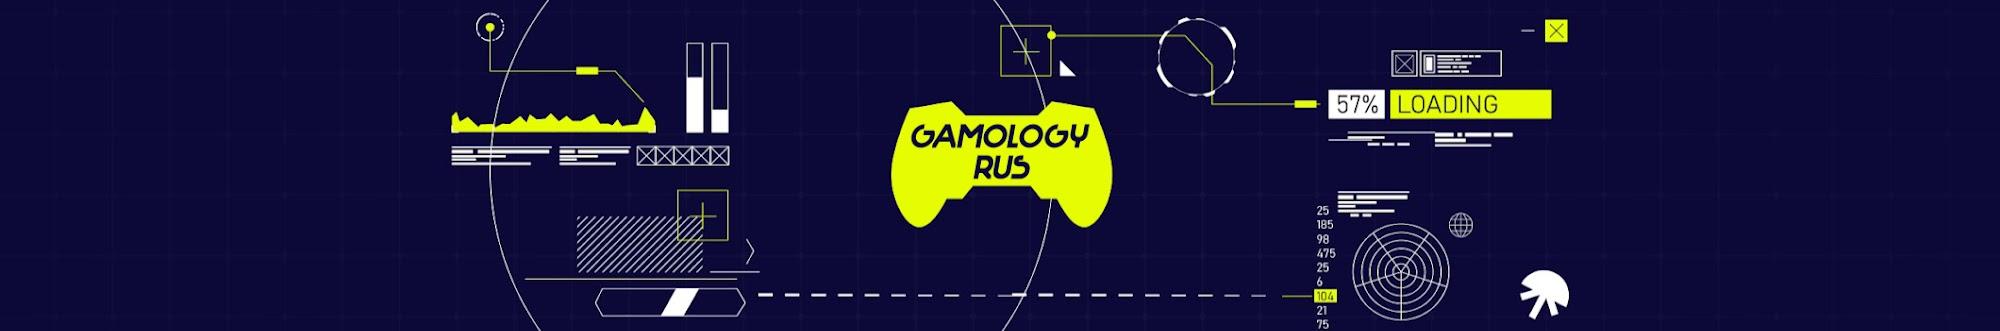 Gamology Rus